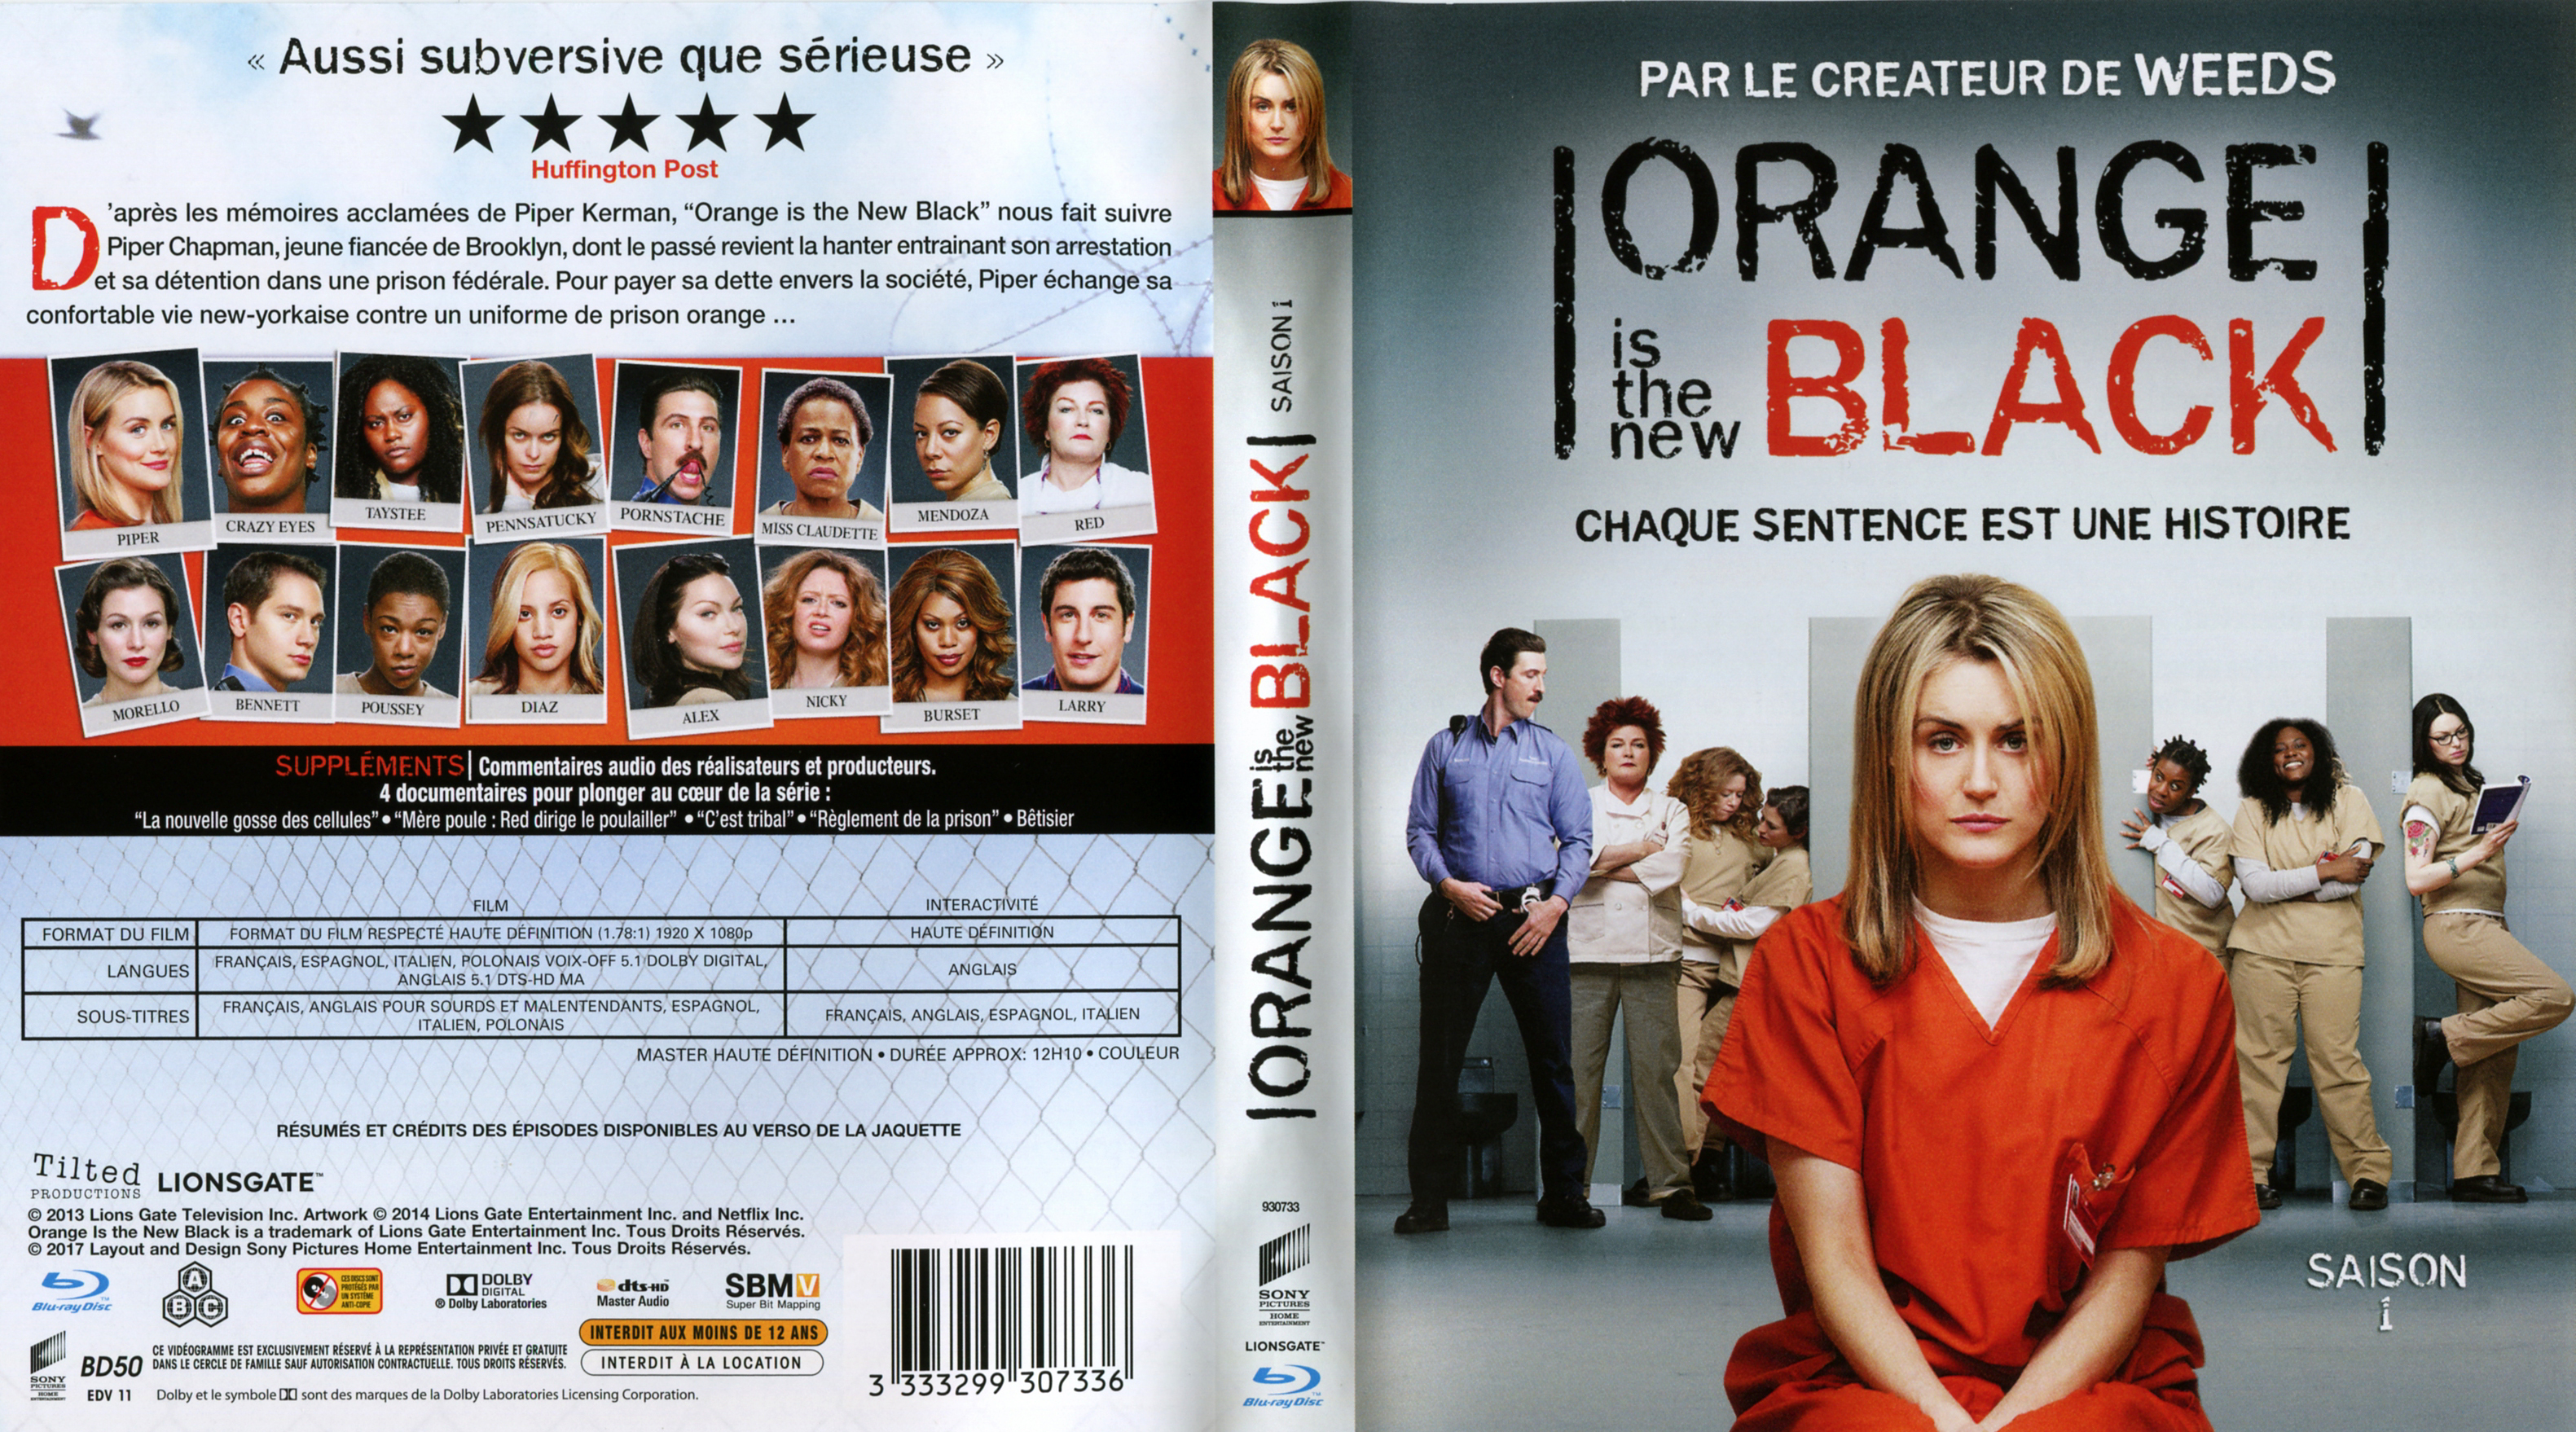 Jaquette DVD Orange Is The New Black Saison 1 (BLU-RAY)